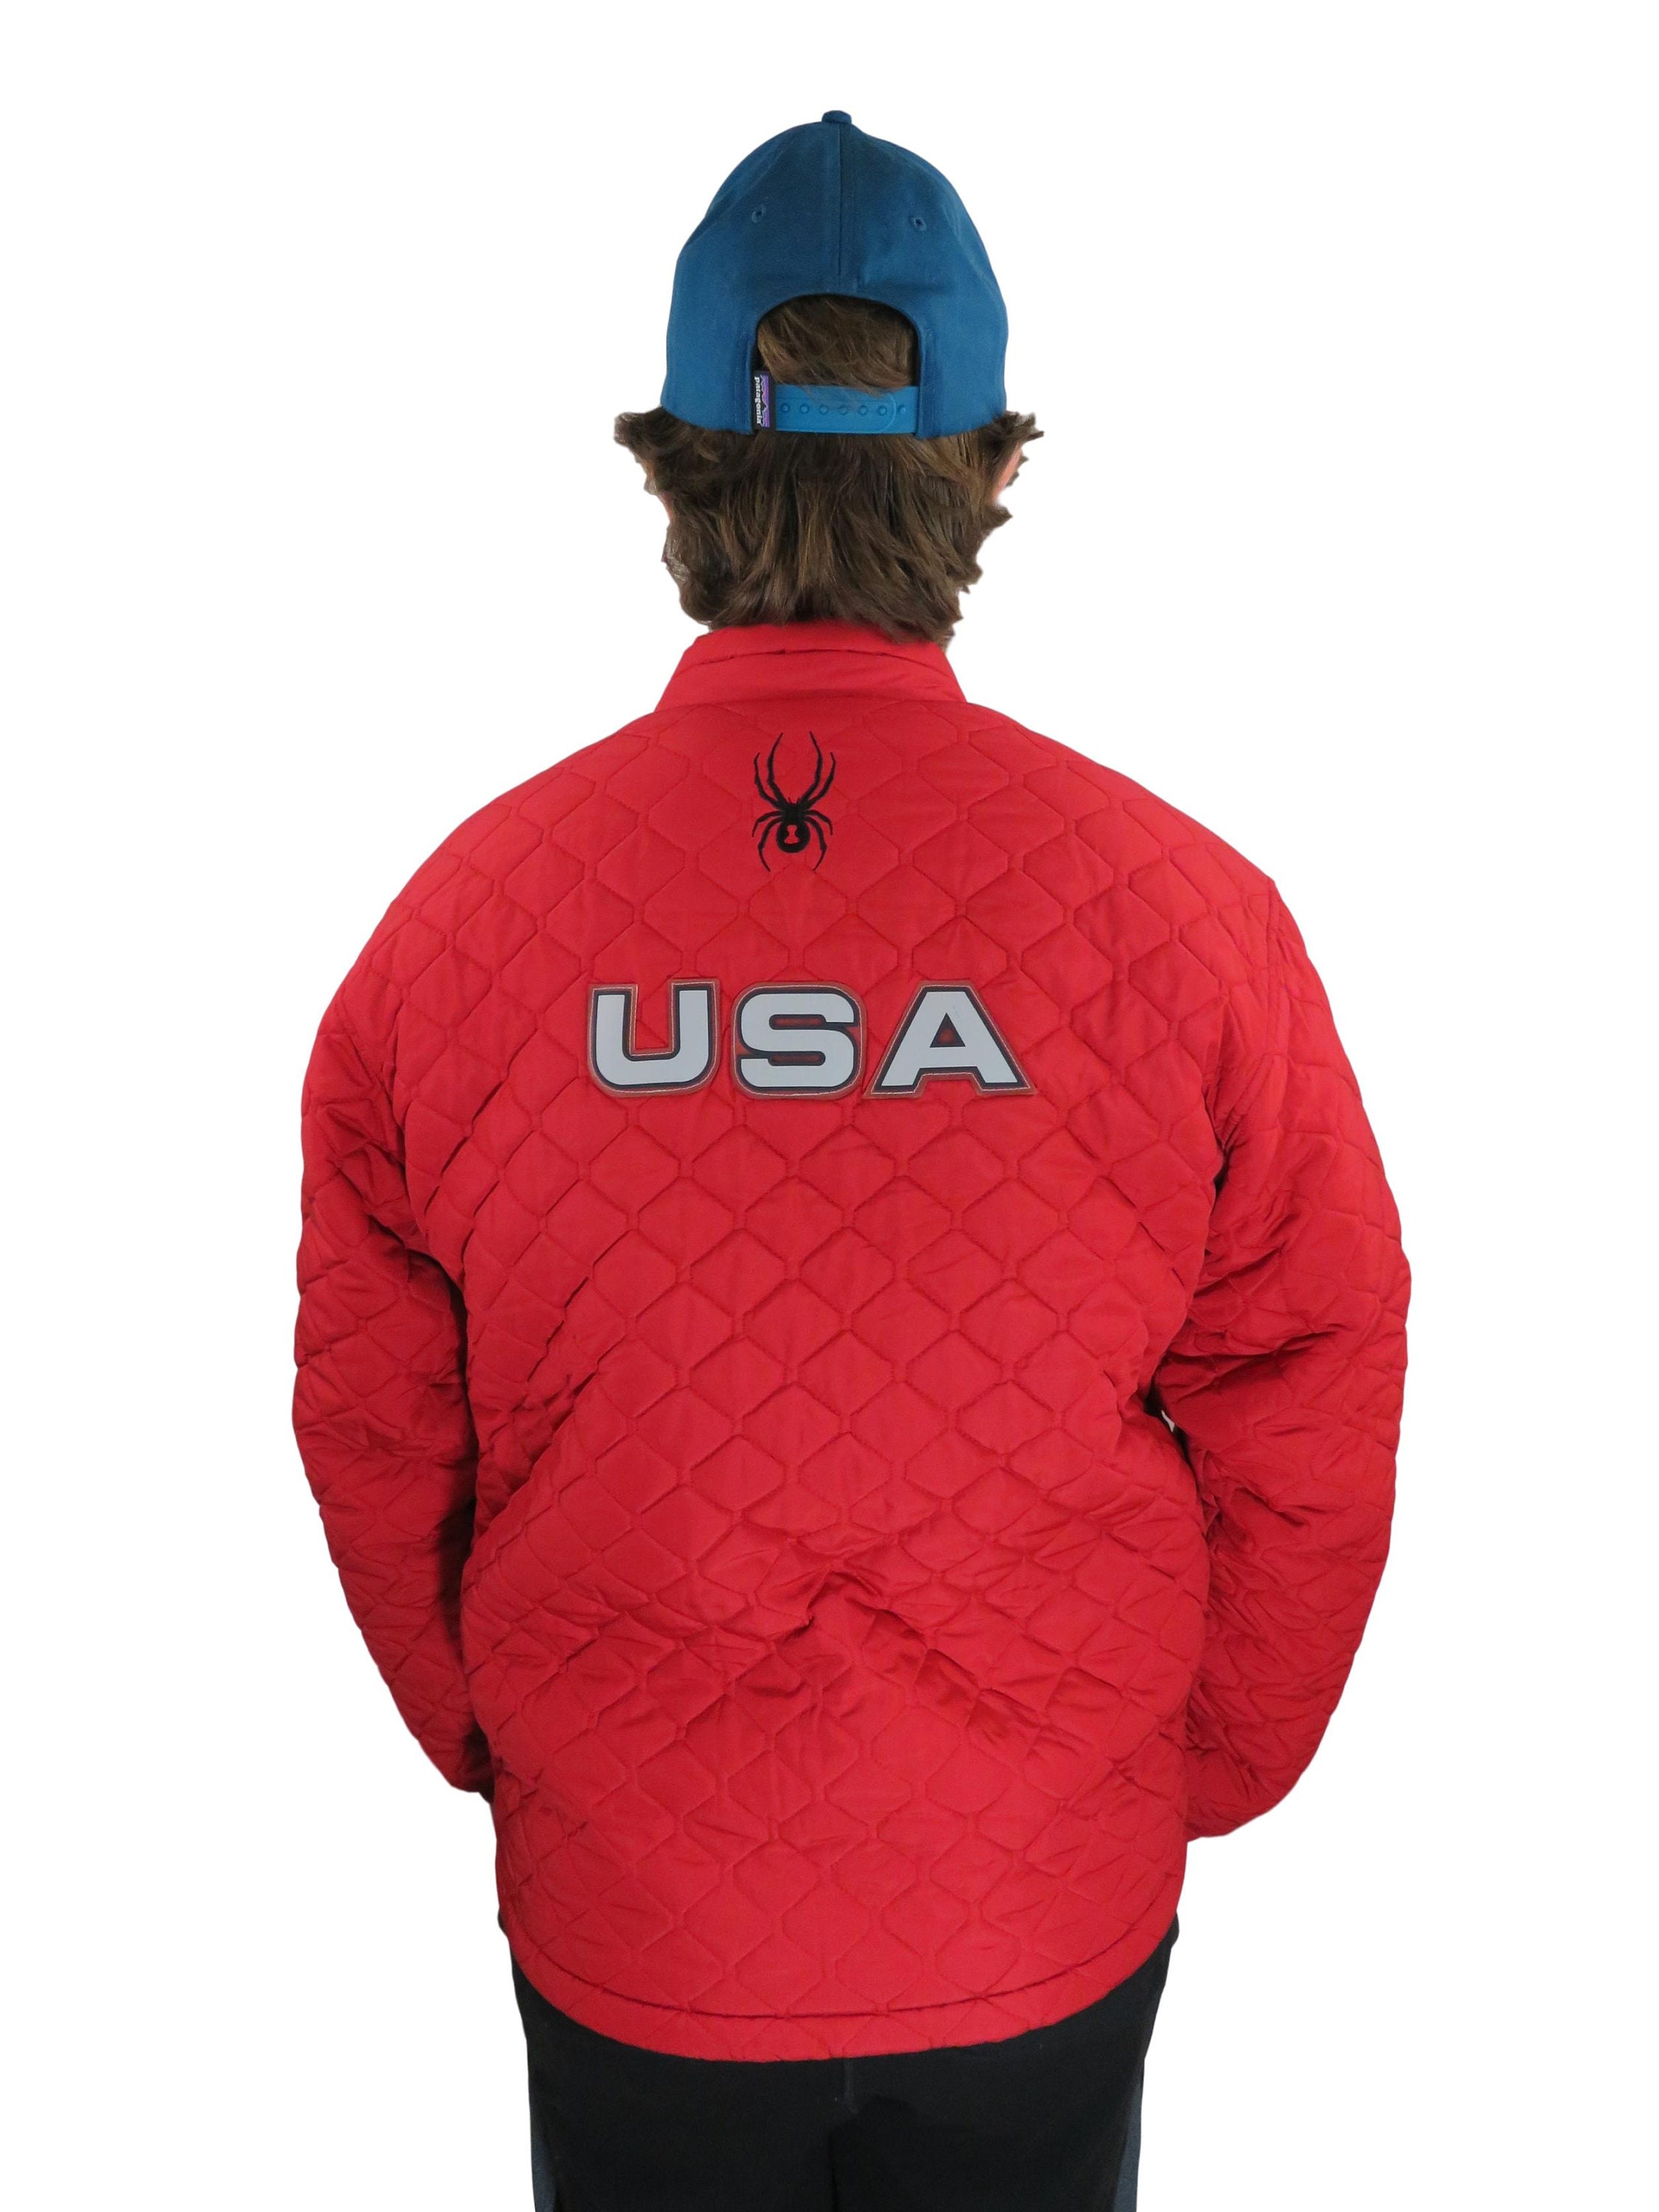 Spyder Men's USA Olympics Ski Team 2002 Jacket Size Small | Etsy